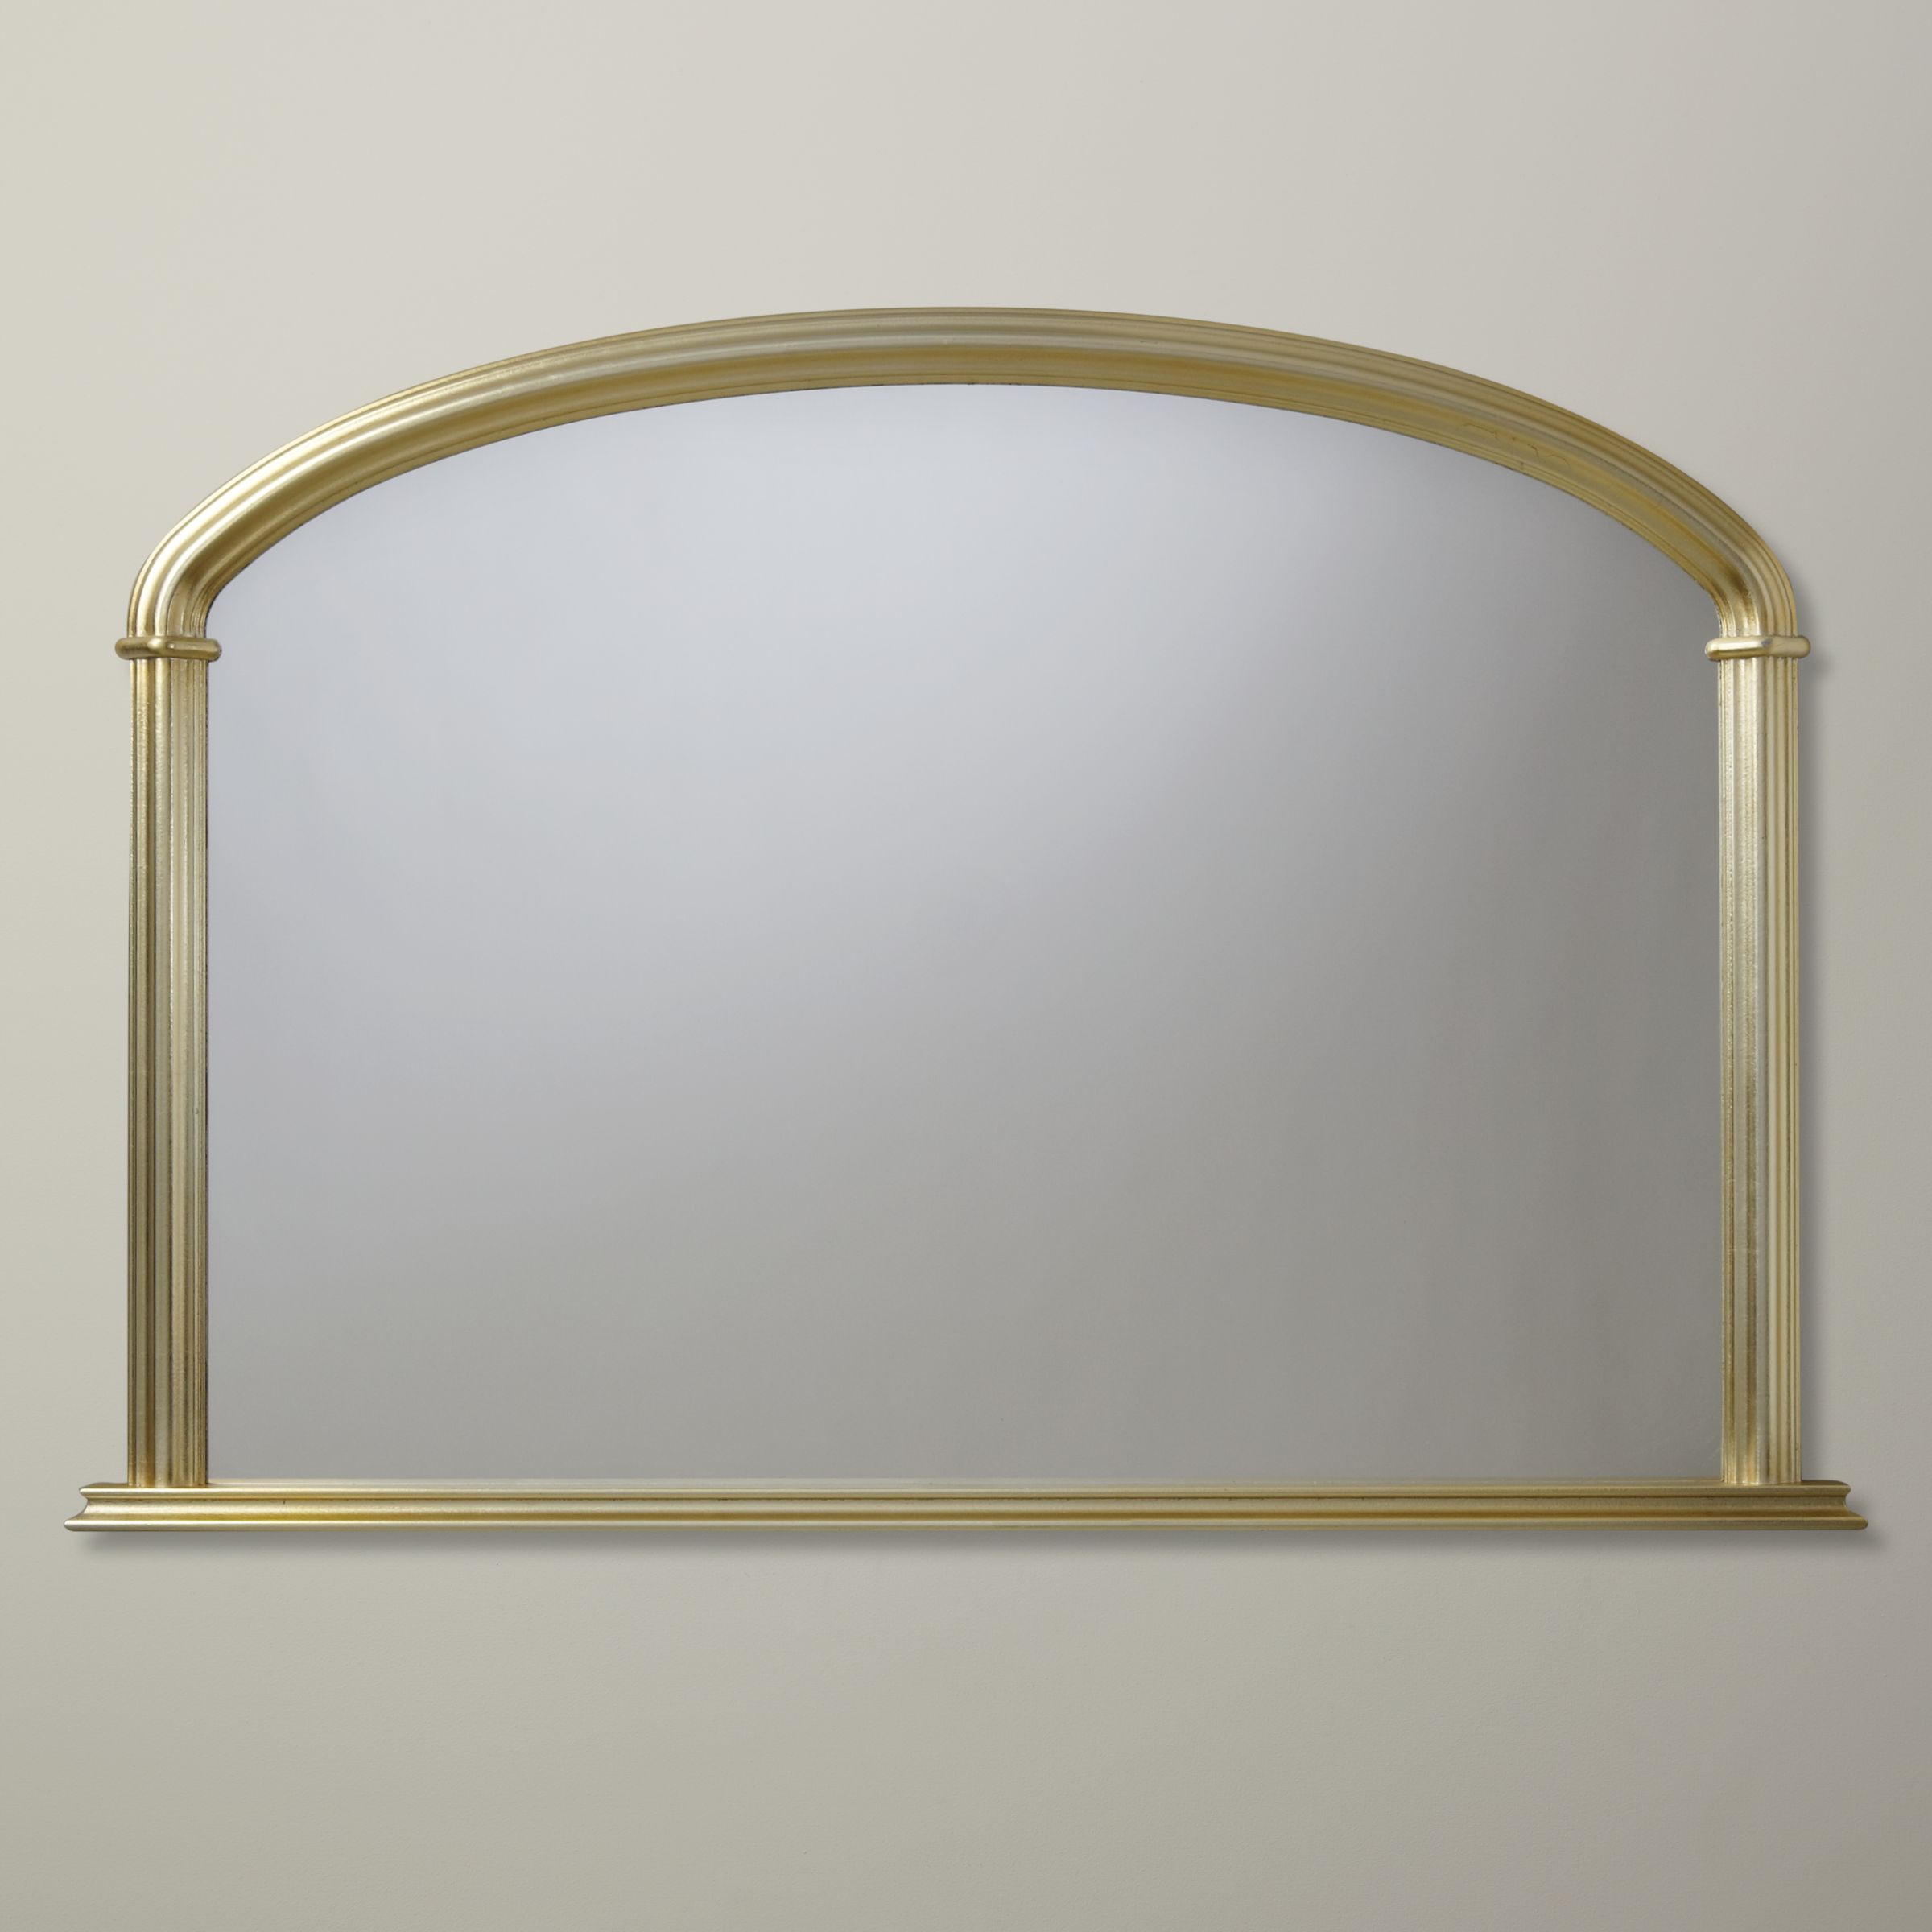 John Lewis & Partners Eve Overmantel Mirror, 84 x 124cm